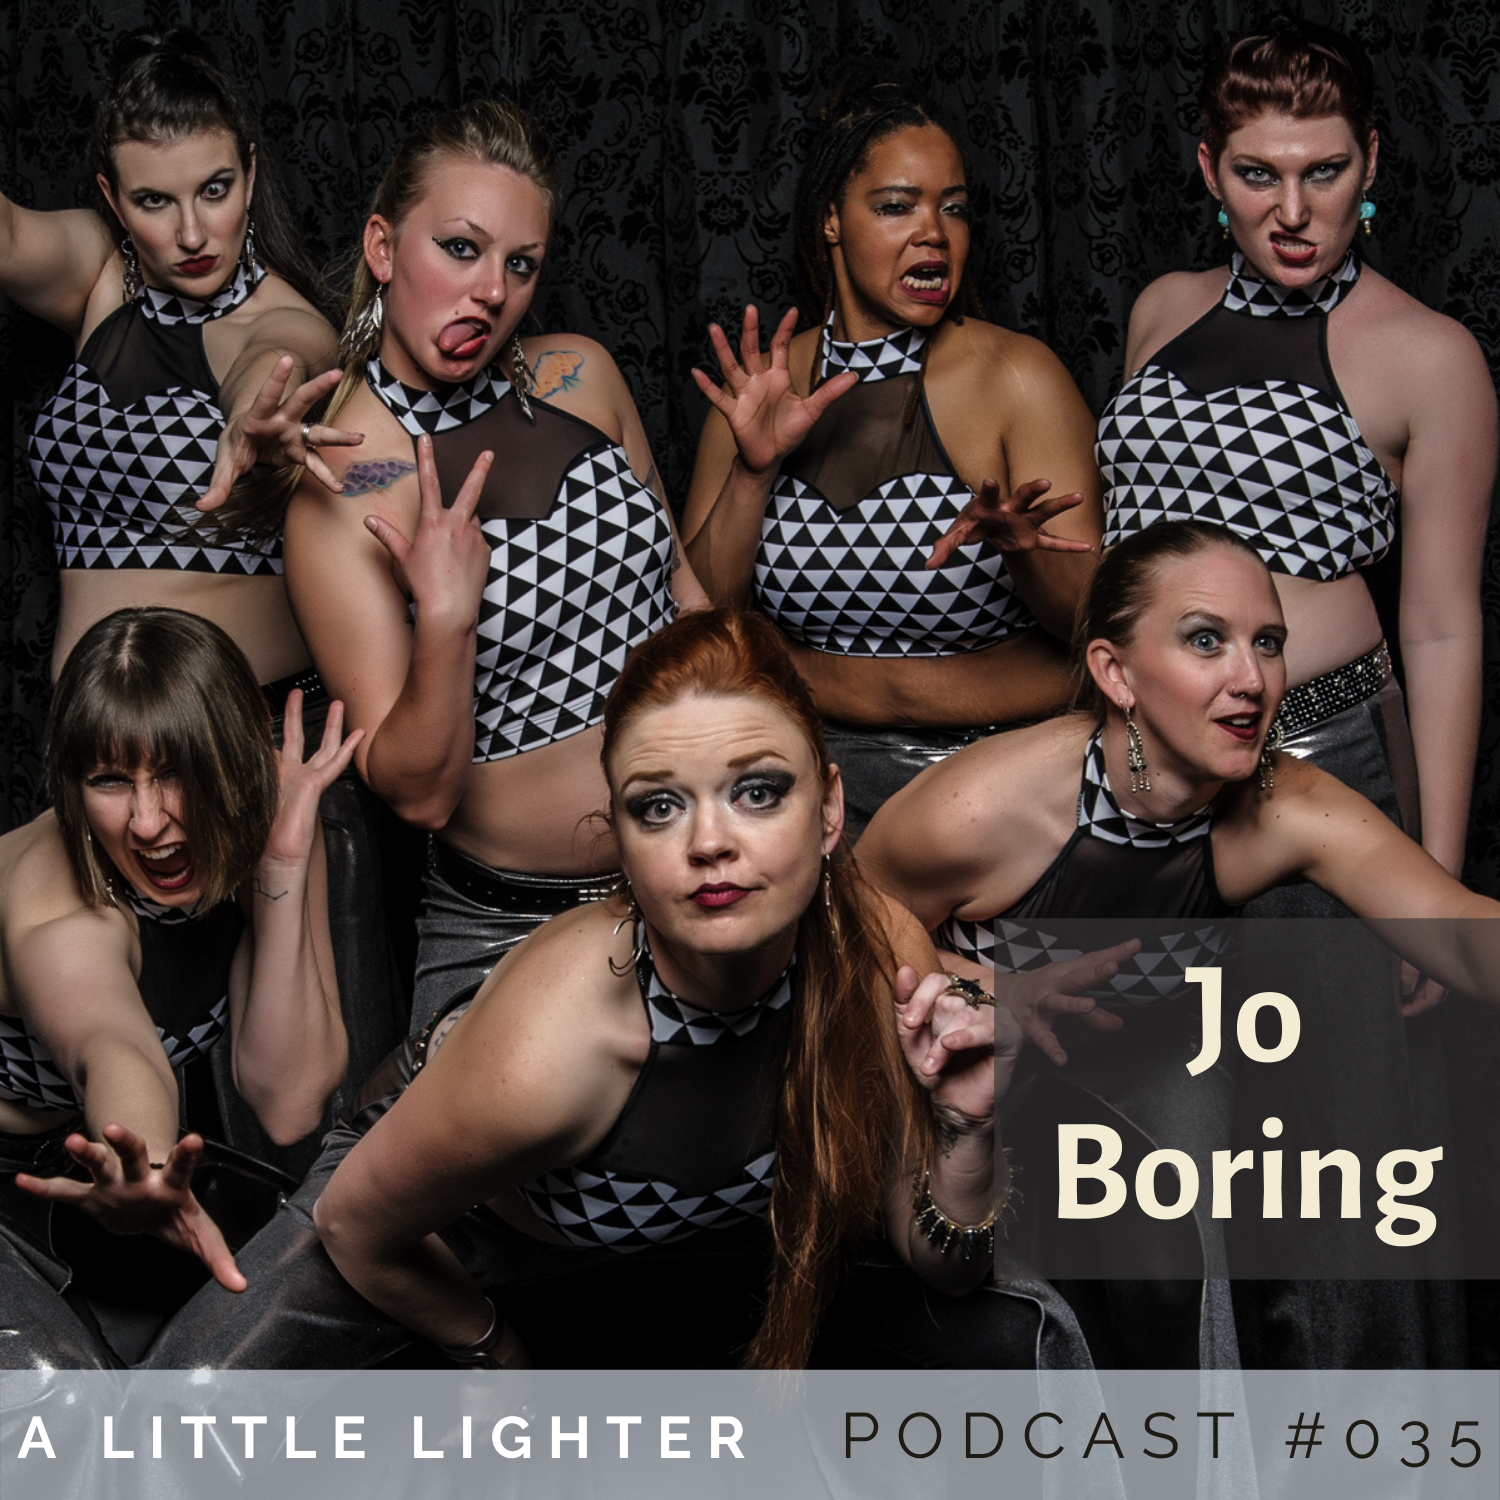 Belly Dance Podcast jo boring